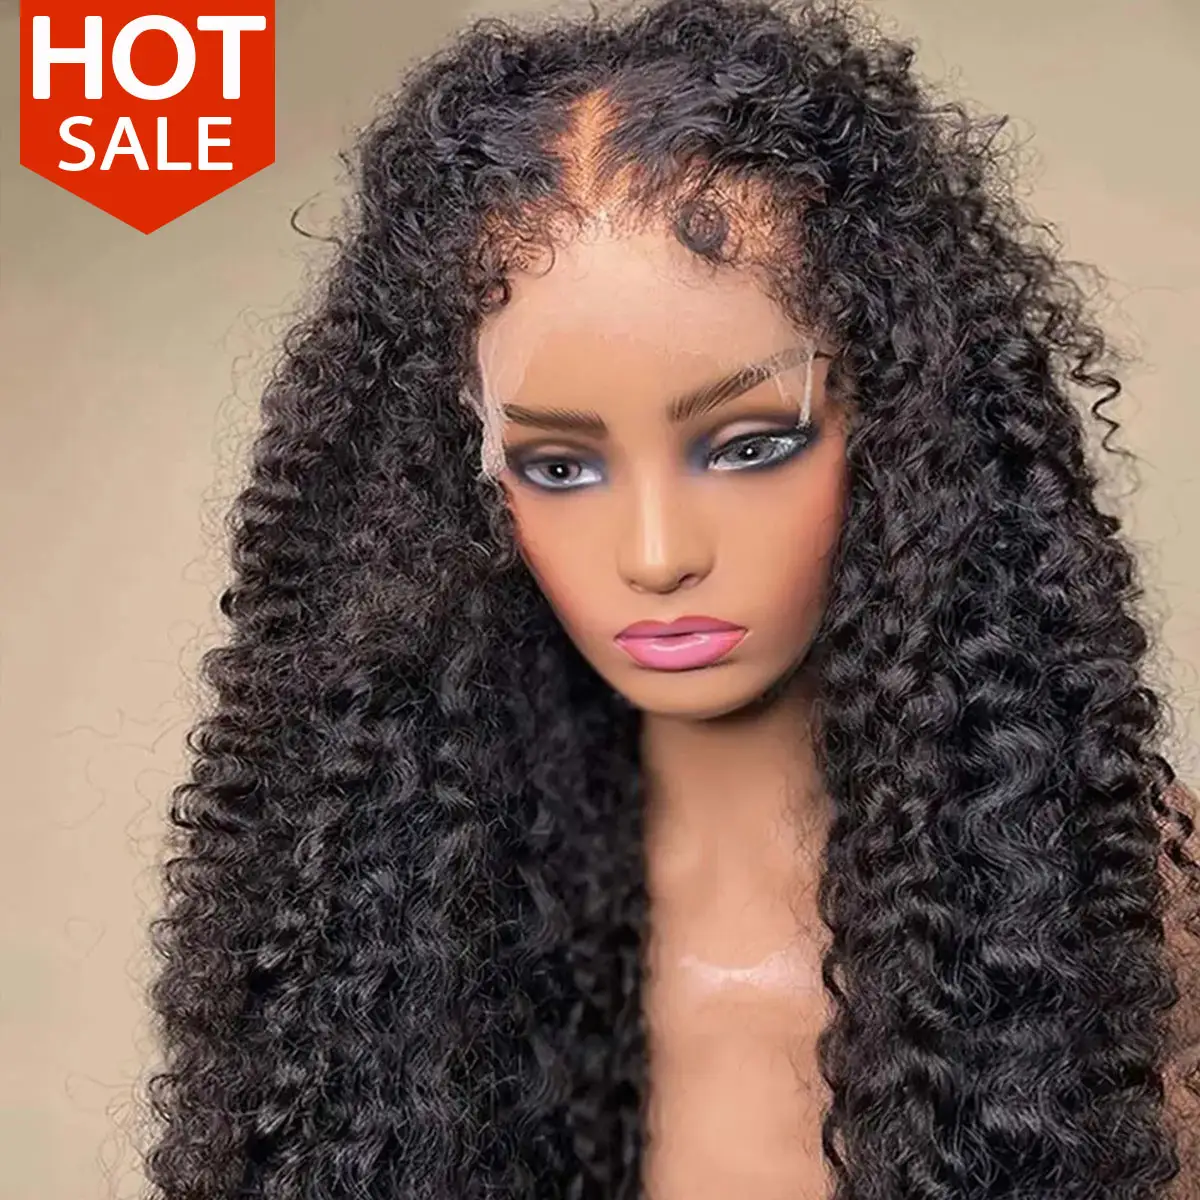 Wholesale Glueless human hair wigs curly Raw Brazilian Virgin Human Hair malaysian curly edge Wigs